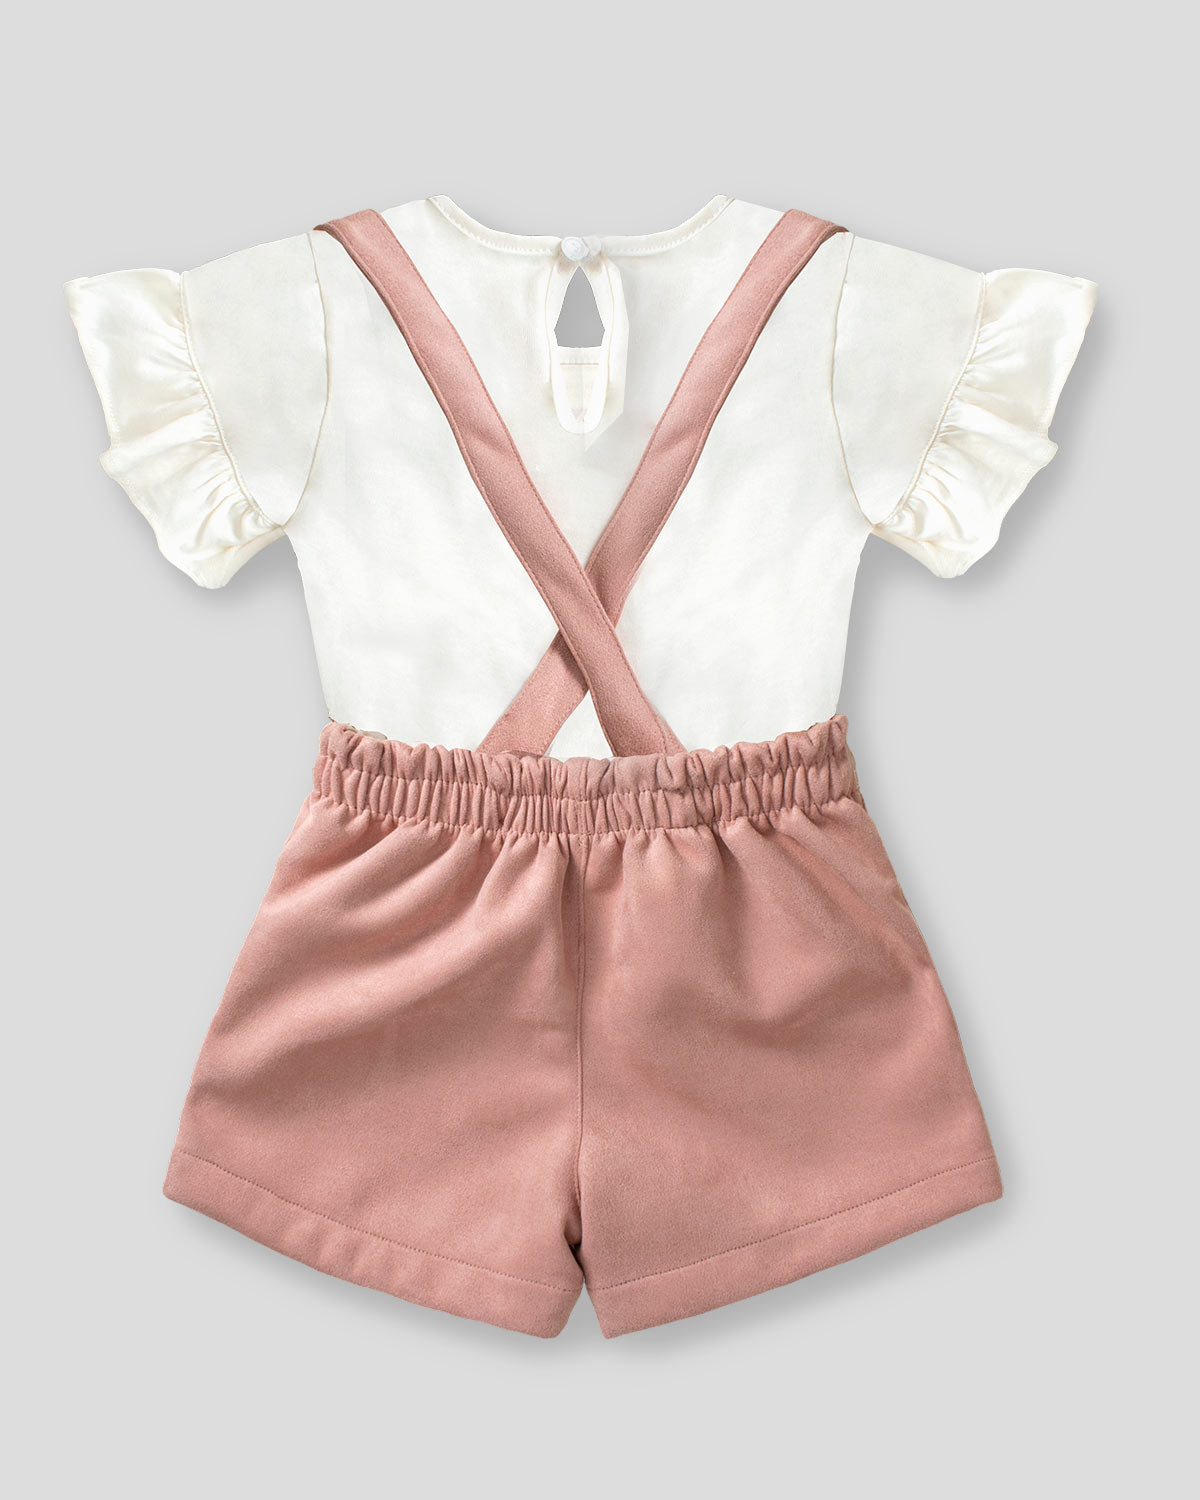 Overol palo de rosa con camiseta beige para niña